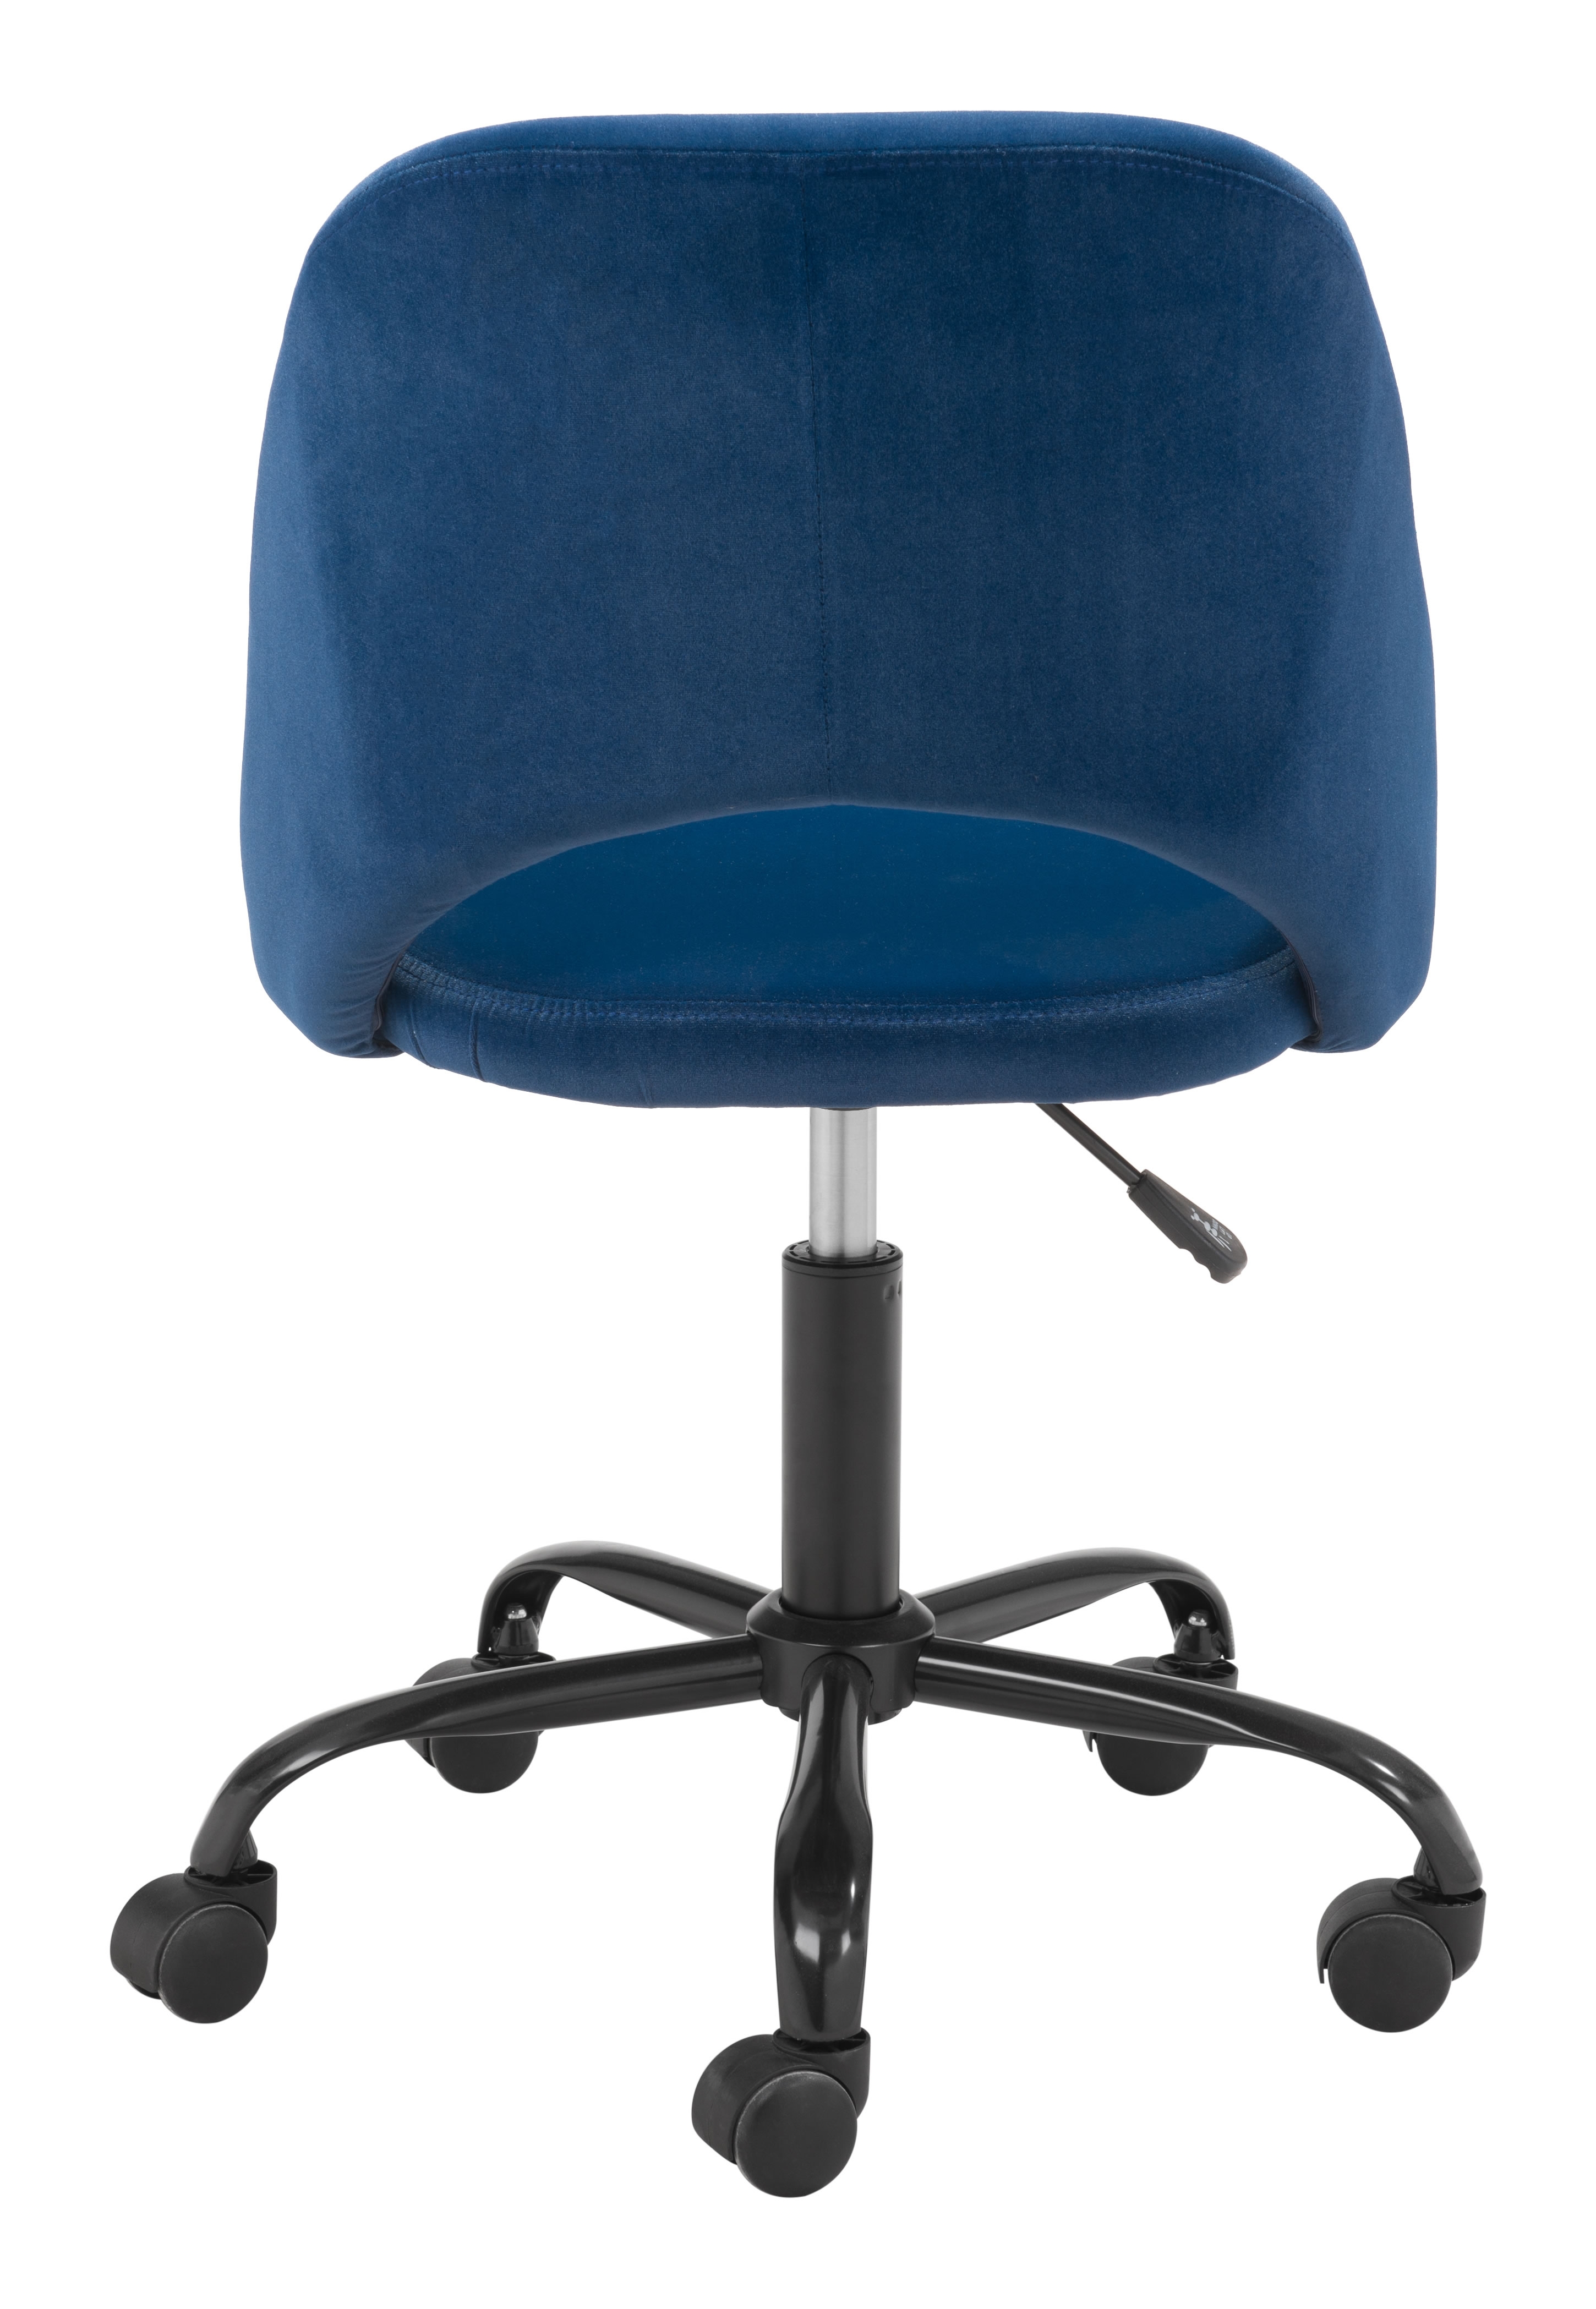 Treibh Office Chair, Navy Blue - Image 2